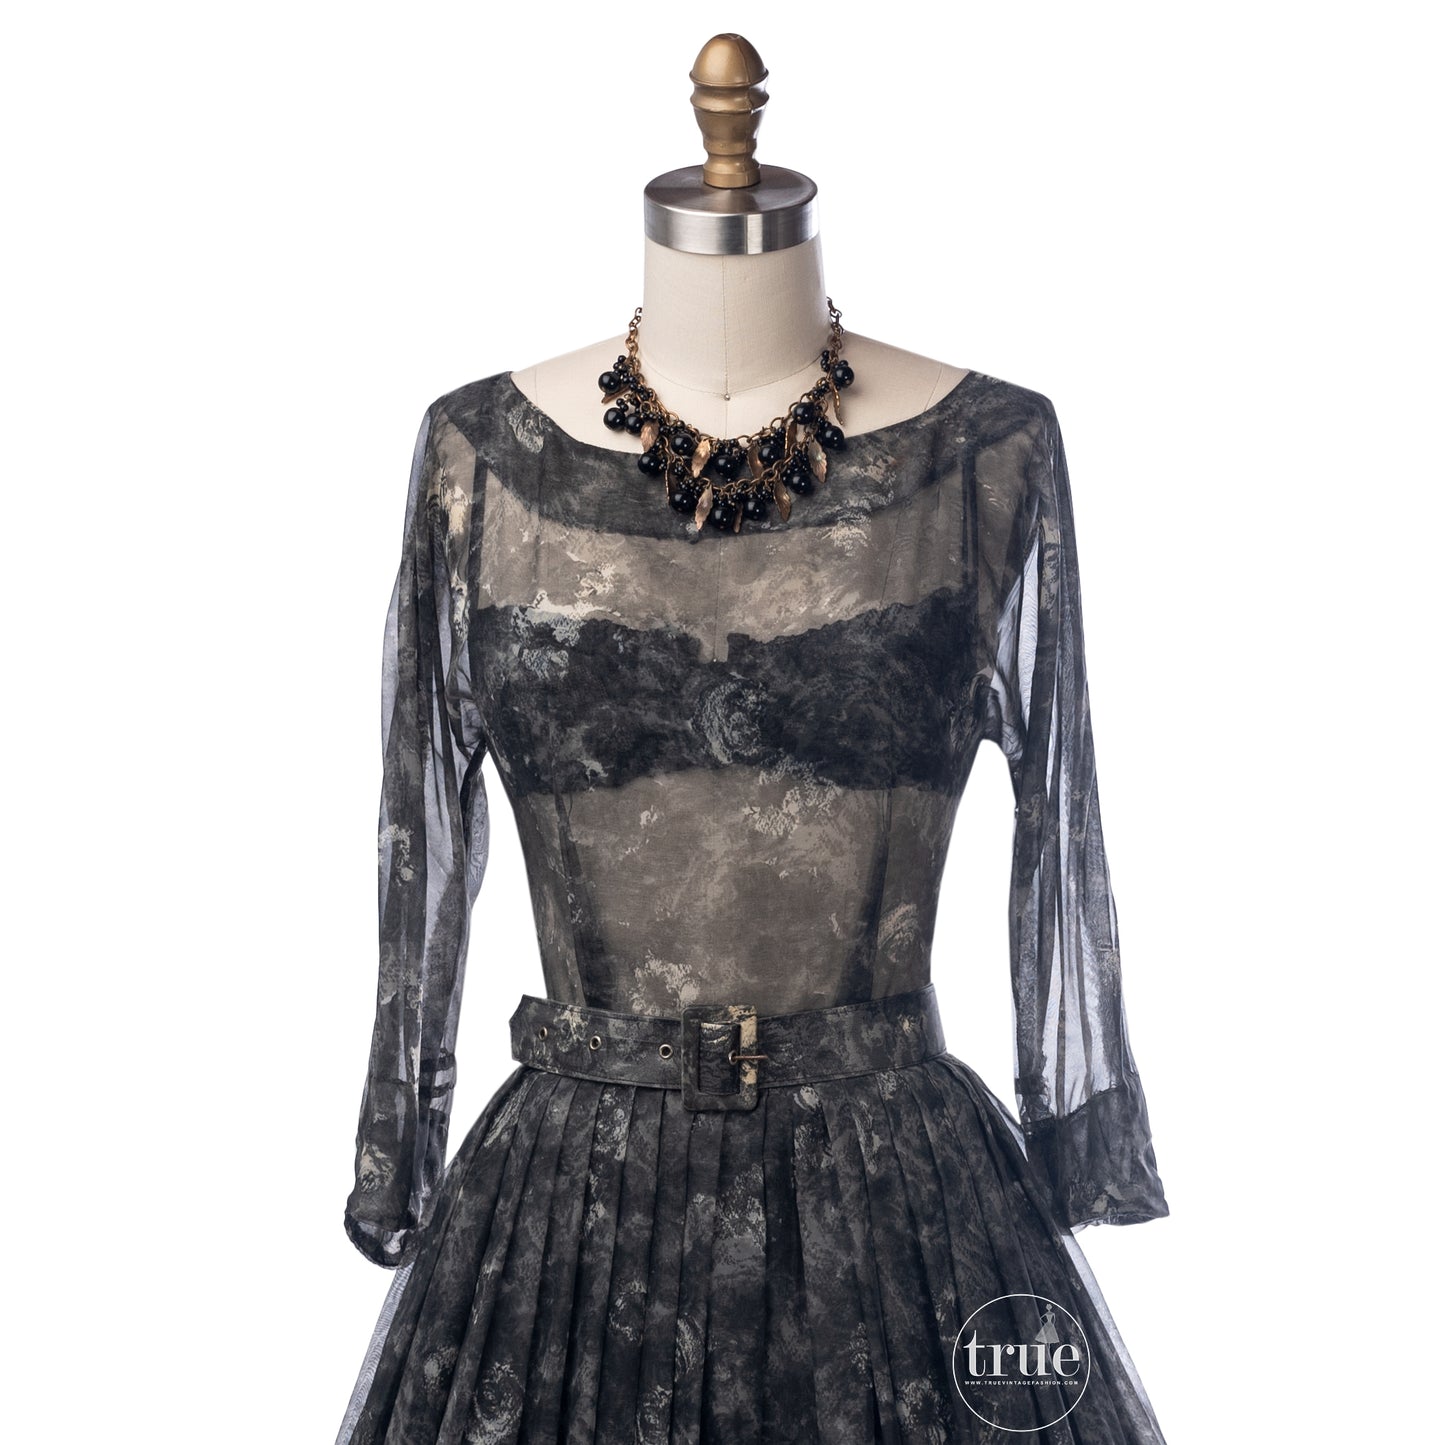 vintage 1950's dress ...pretty sheer rose floral chiffon full skirt party dress